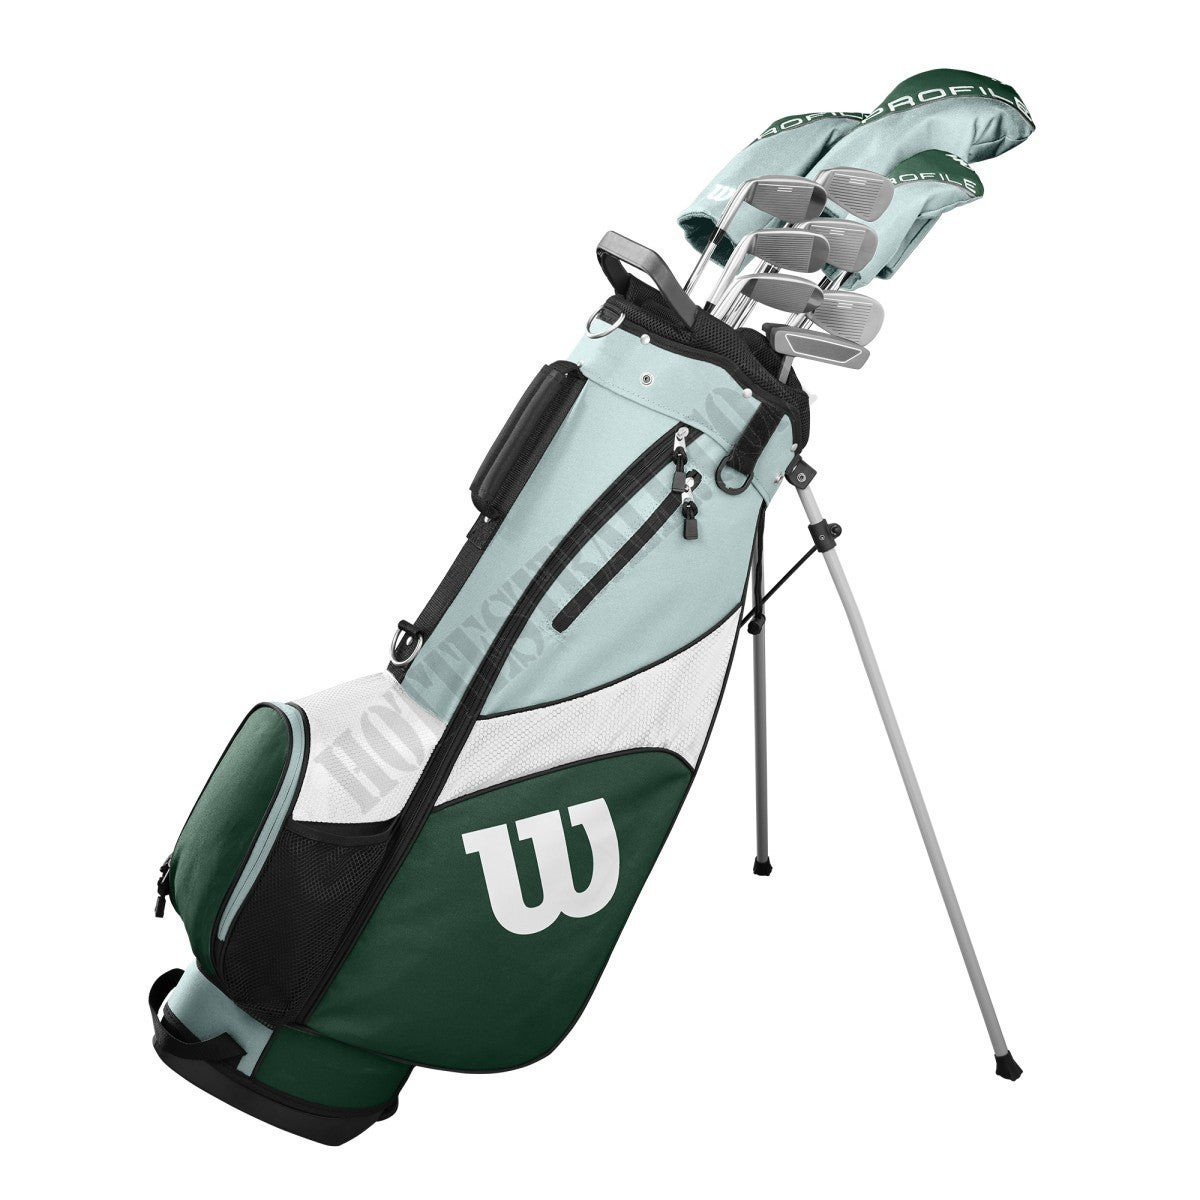 Women's Profile SGI Complete Golf Set - Carry - Wilson Discount Store - Women's Profile SGI Complete Golf Set - Carry - Wilson Discount Store